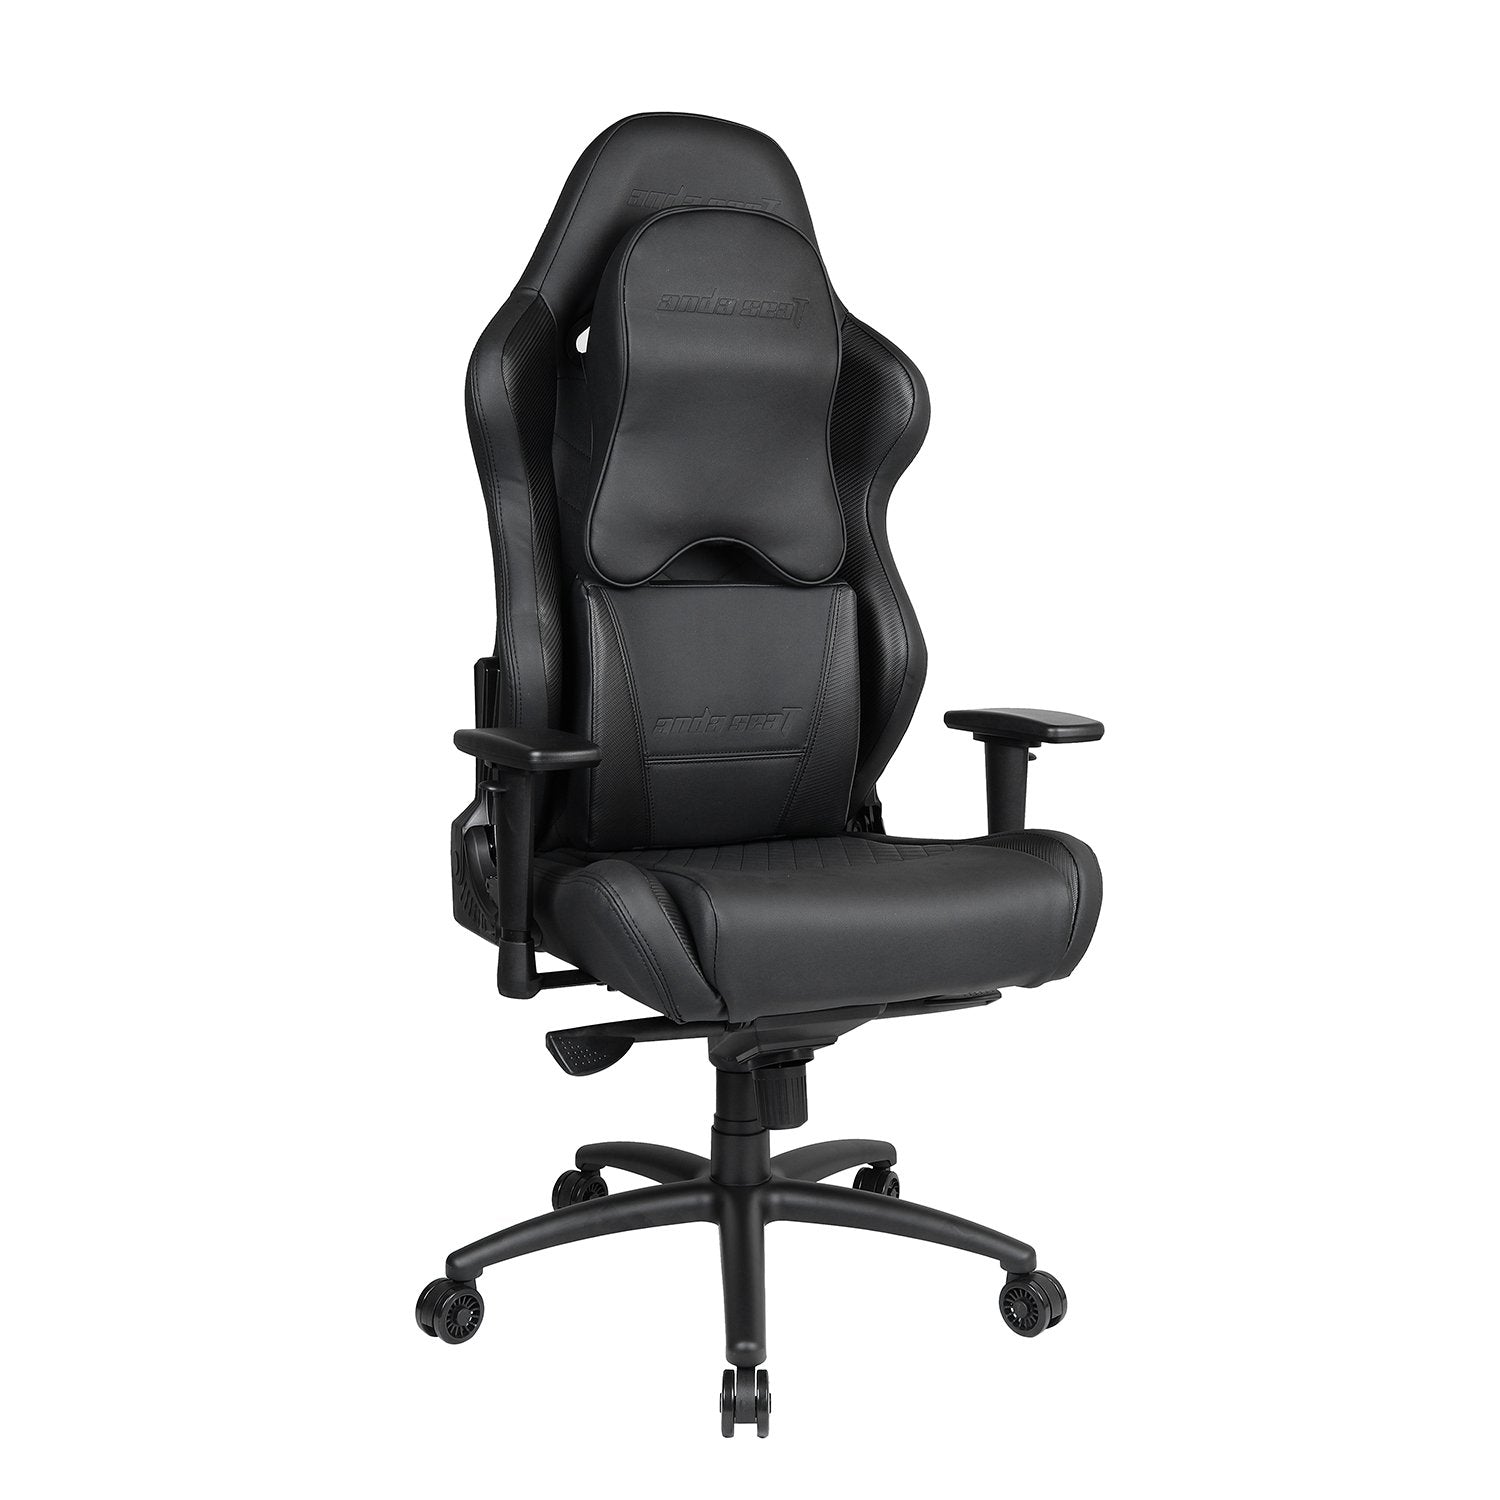 Anda Seat Dark Wizard Premium Gaming Chair The Best Pro Gamer Seat